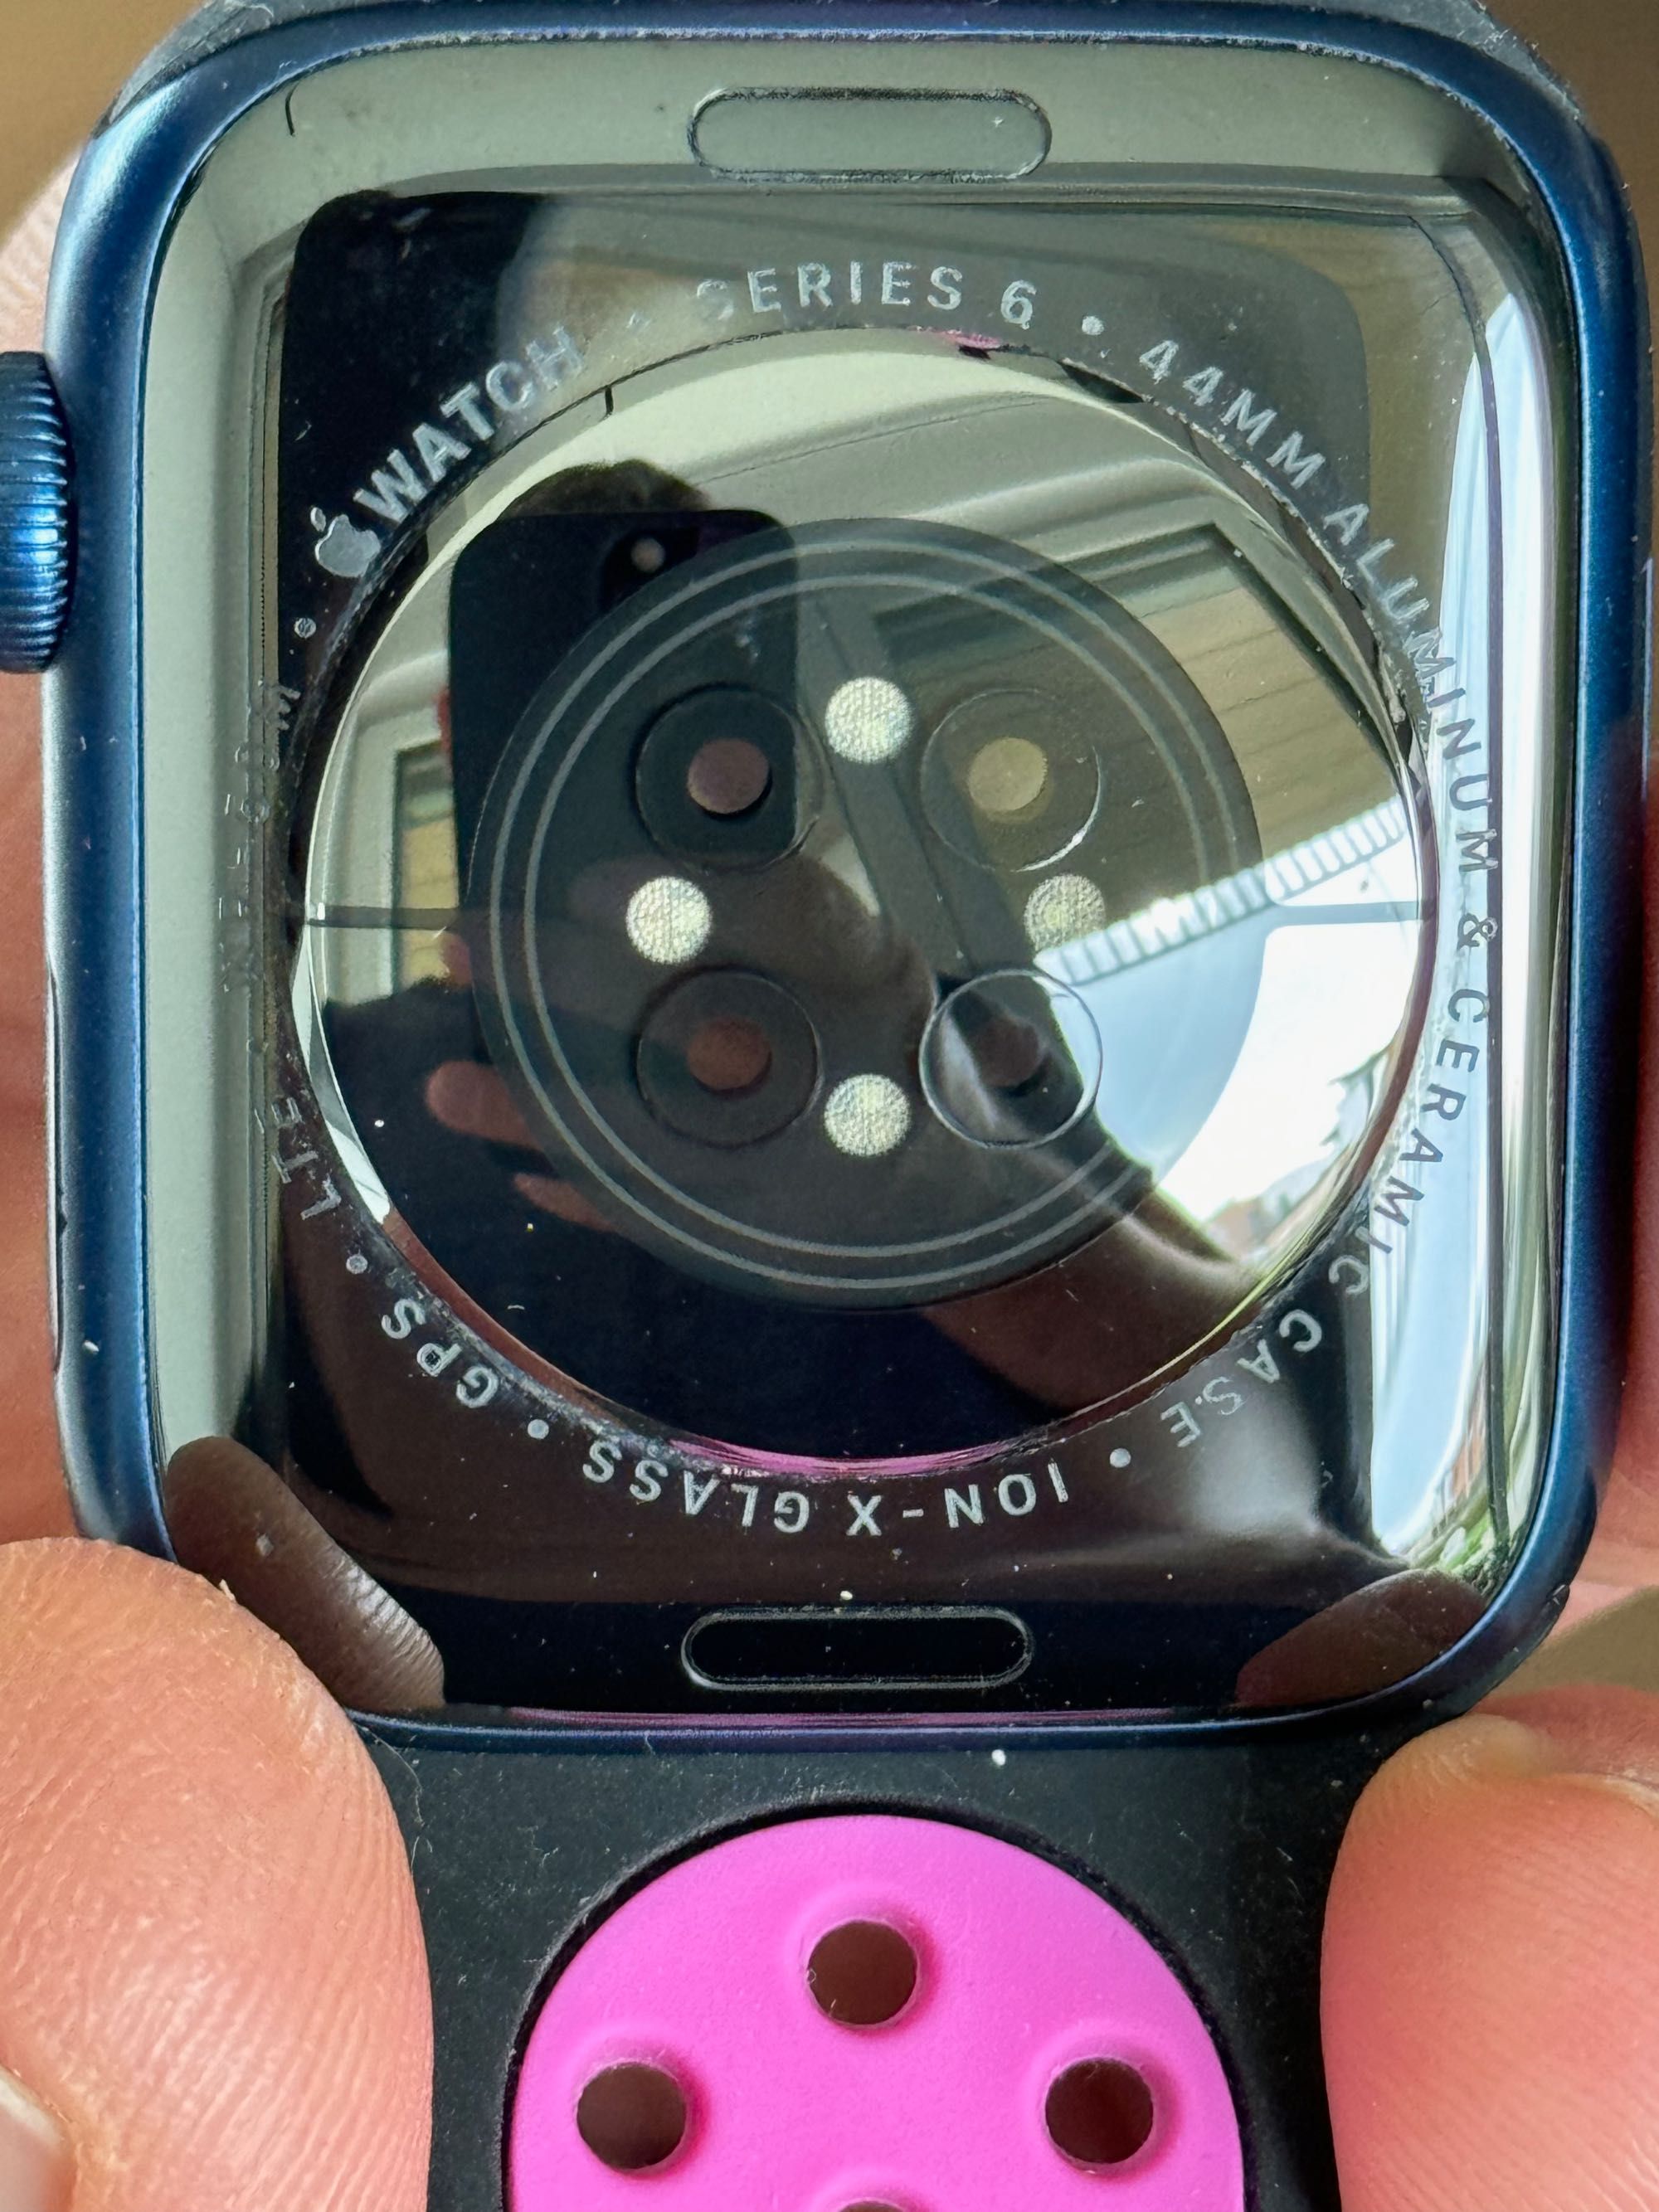 Apple Watch Series 6, 44mm, Blue Aluminum, GPS + GSM, Unlocked